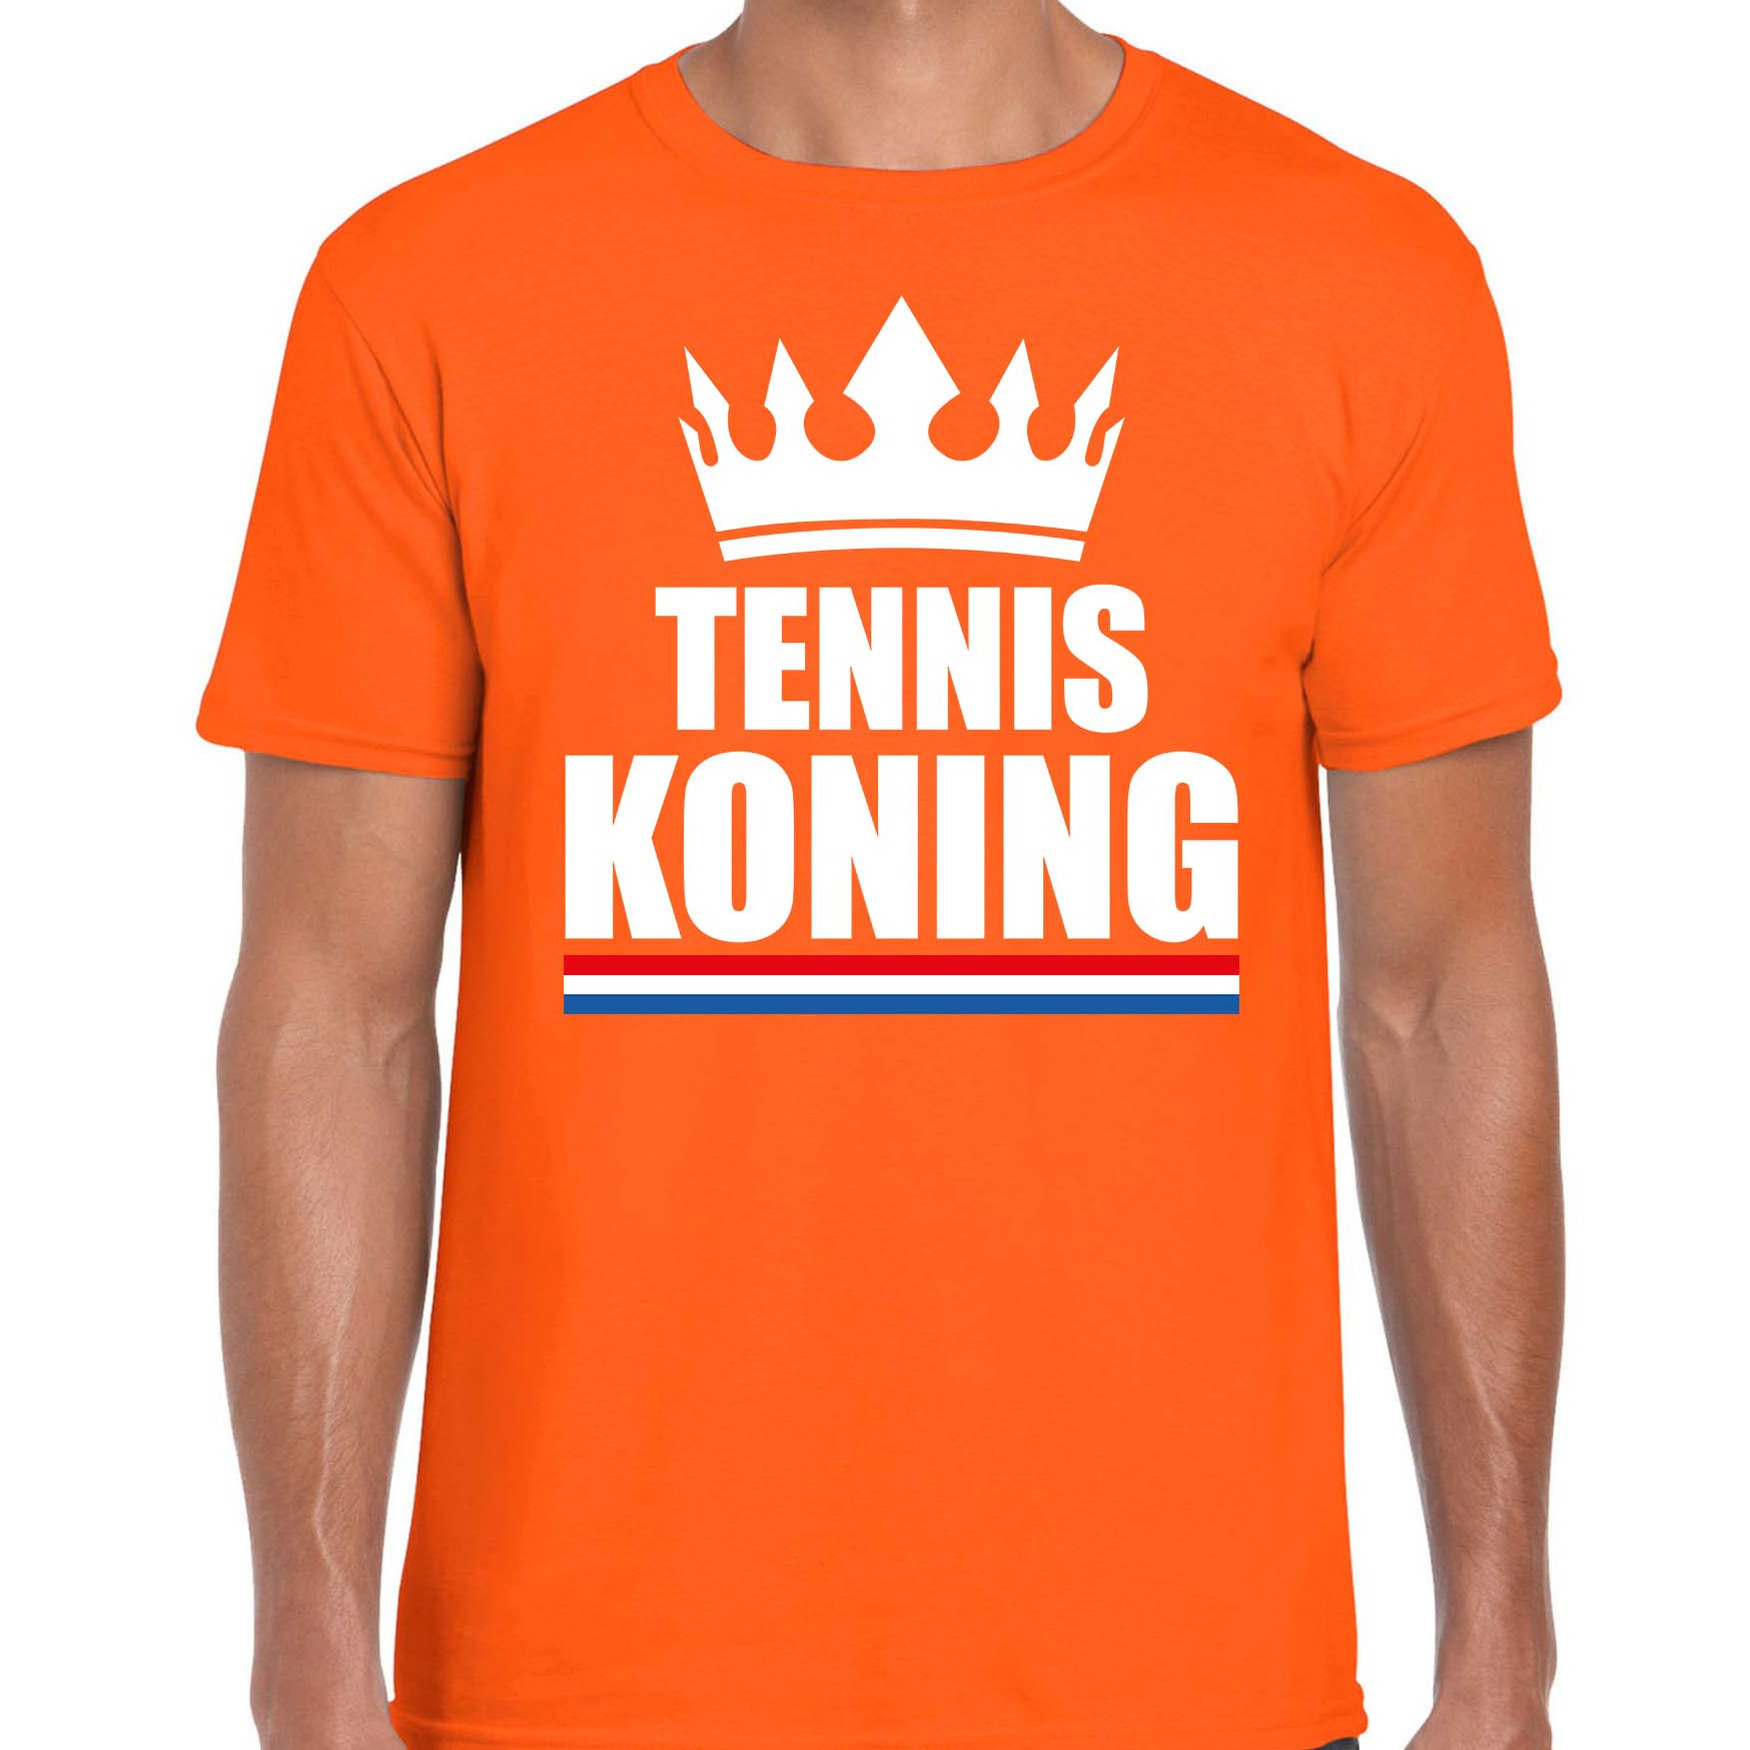 Tennis koning t-shirt oranje heren - Sport - hobby shirts